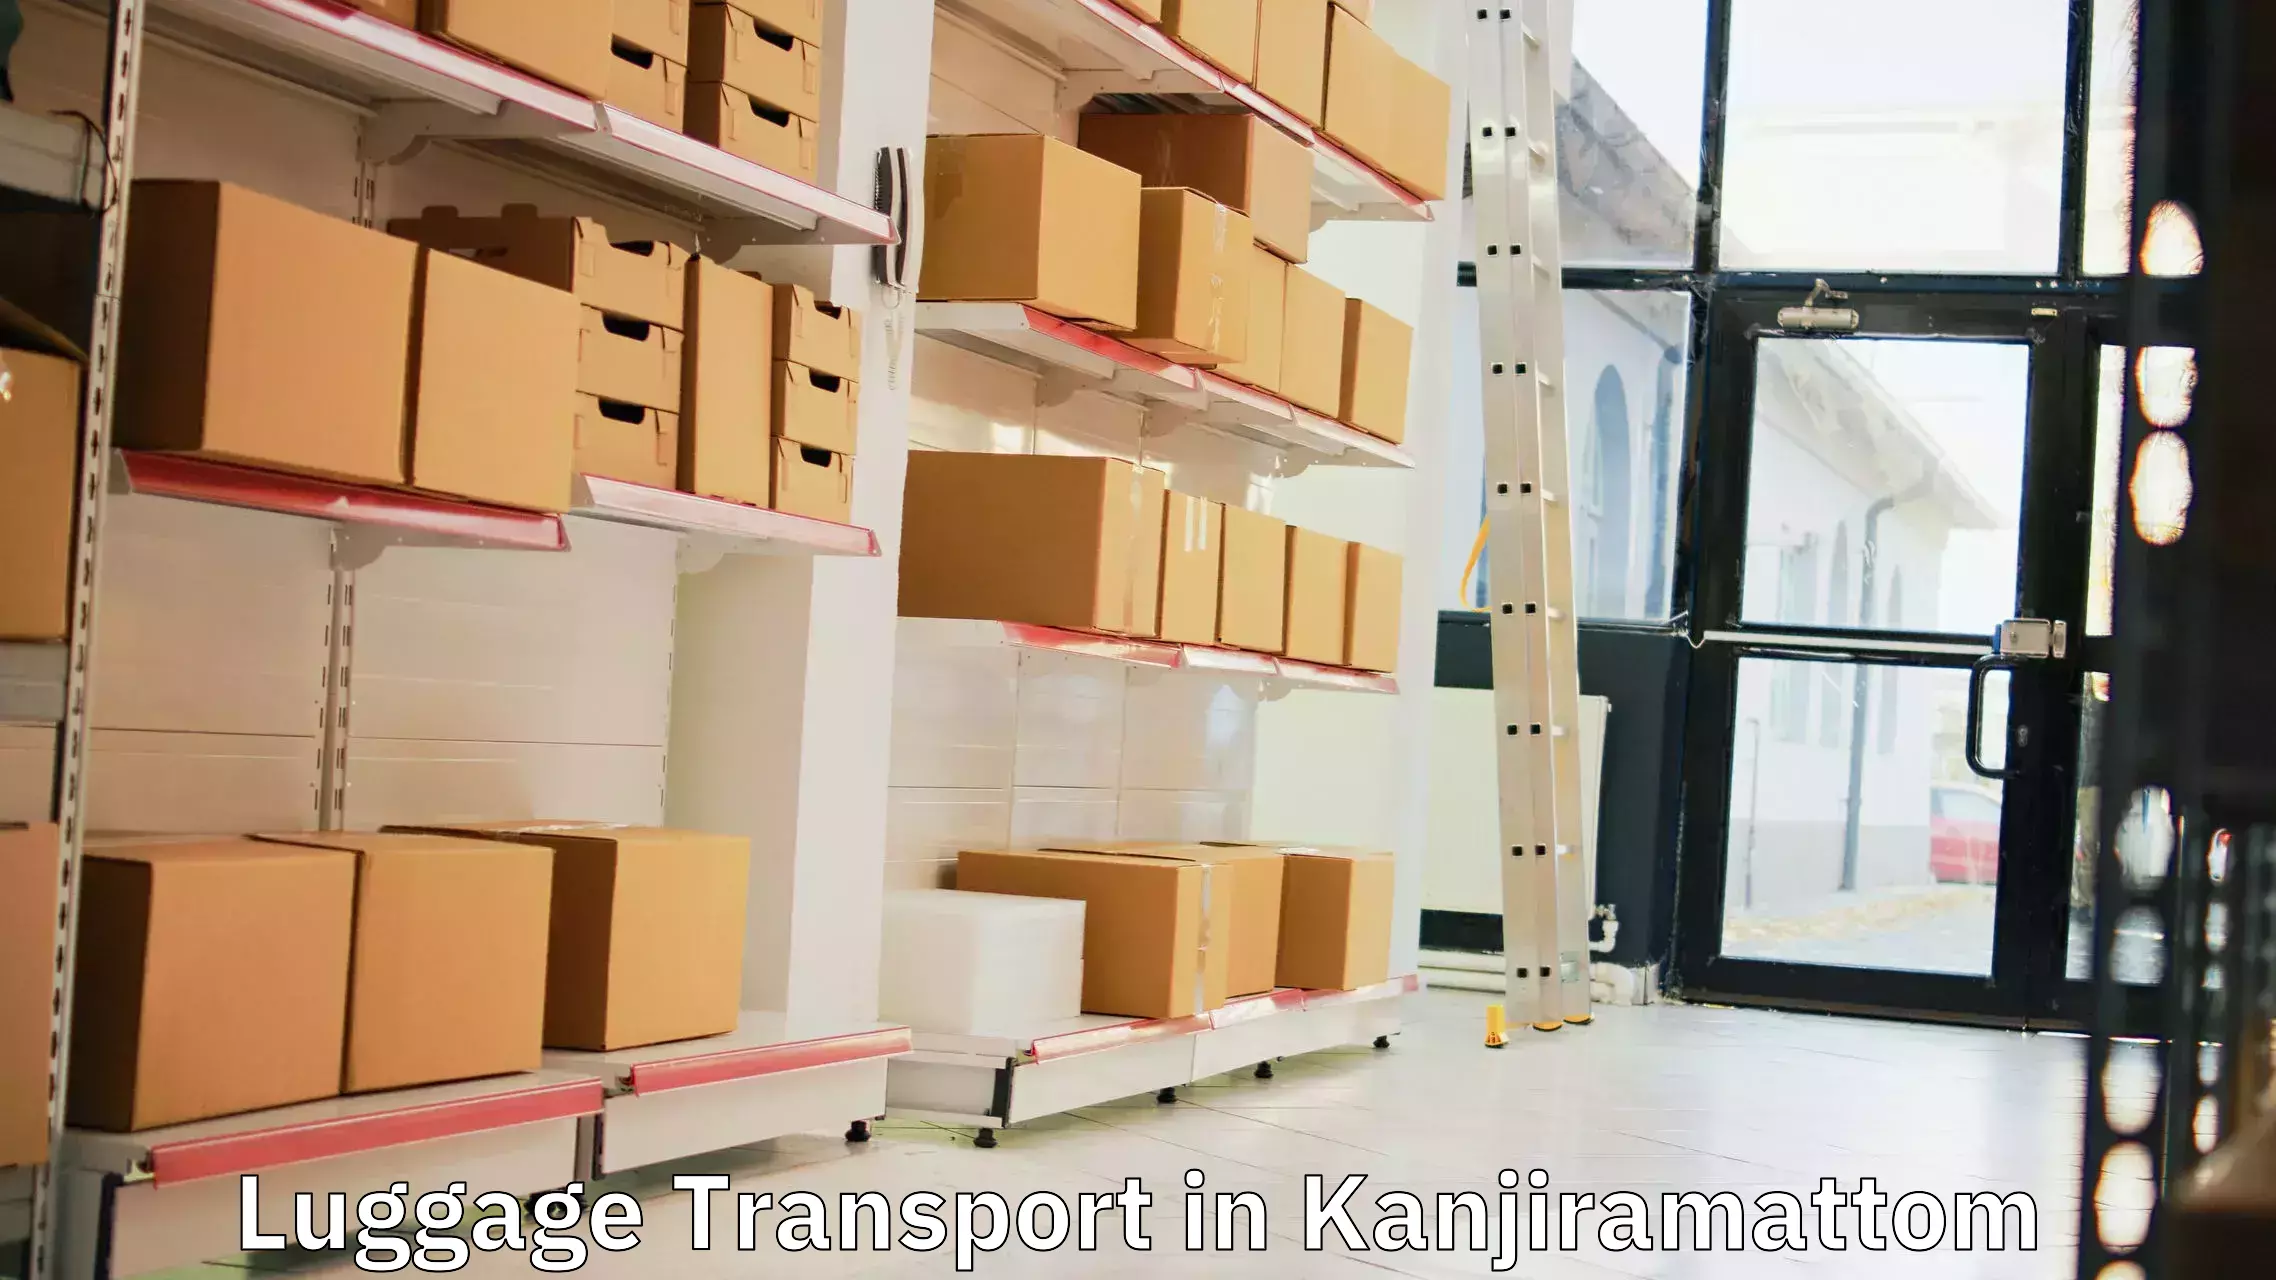 Luggage transport solutions in Kanjiramattom